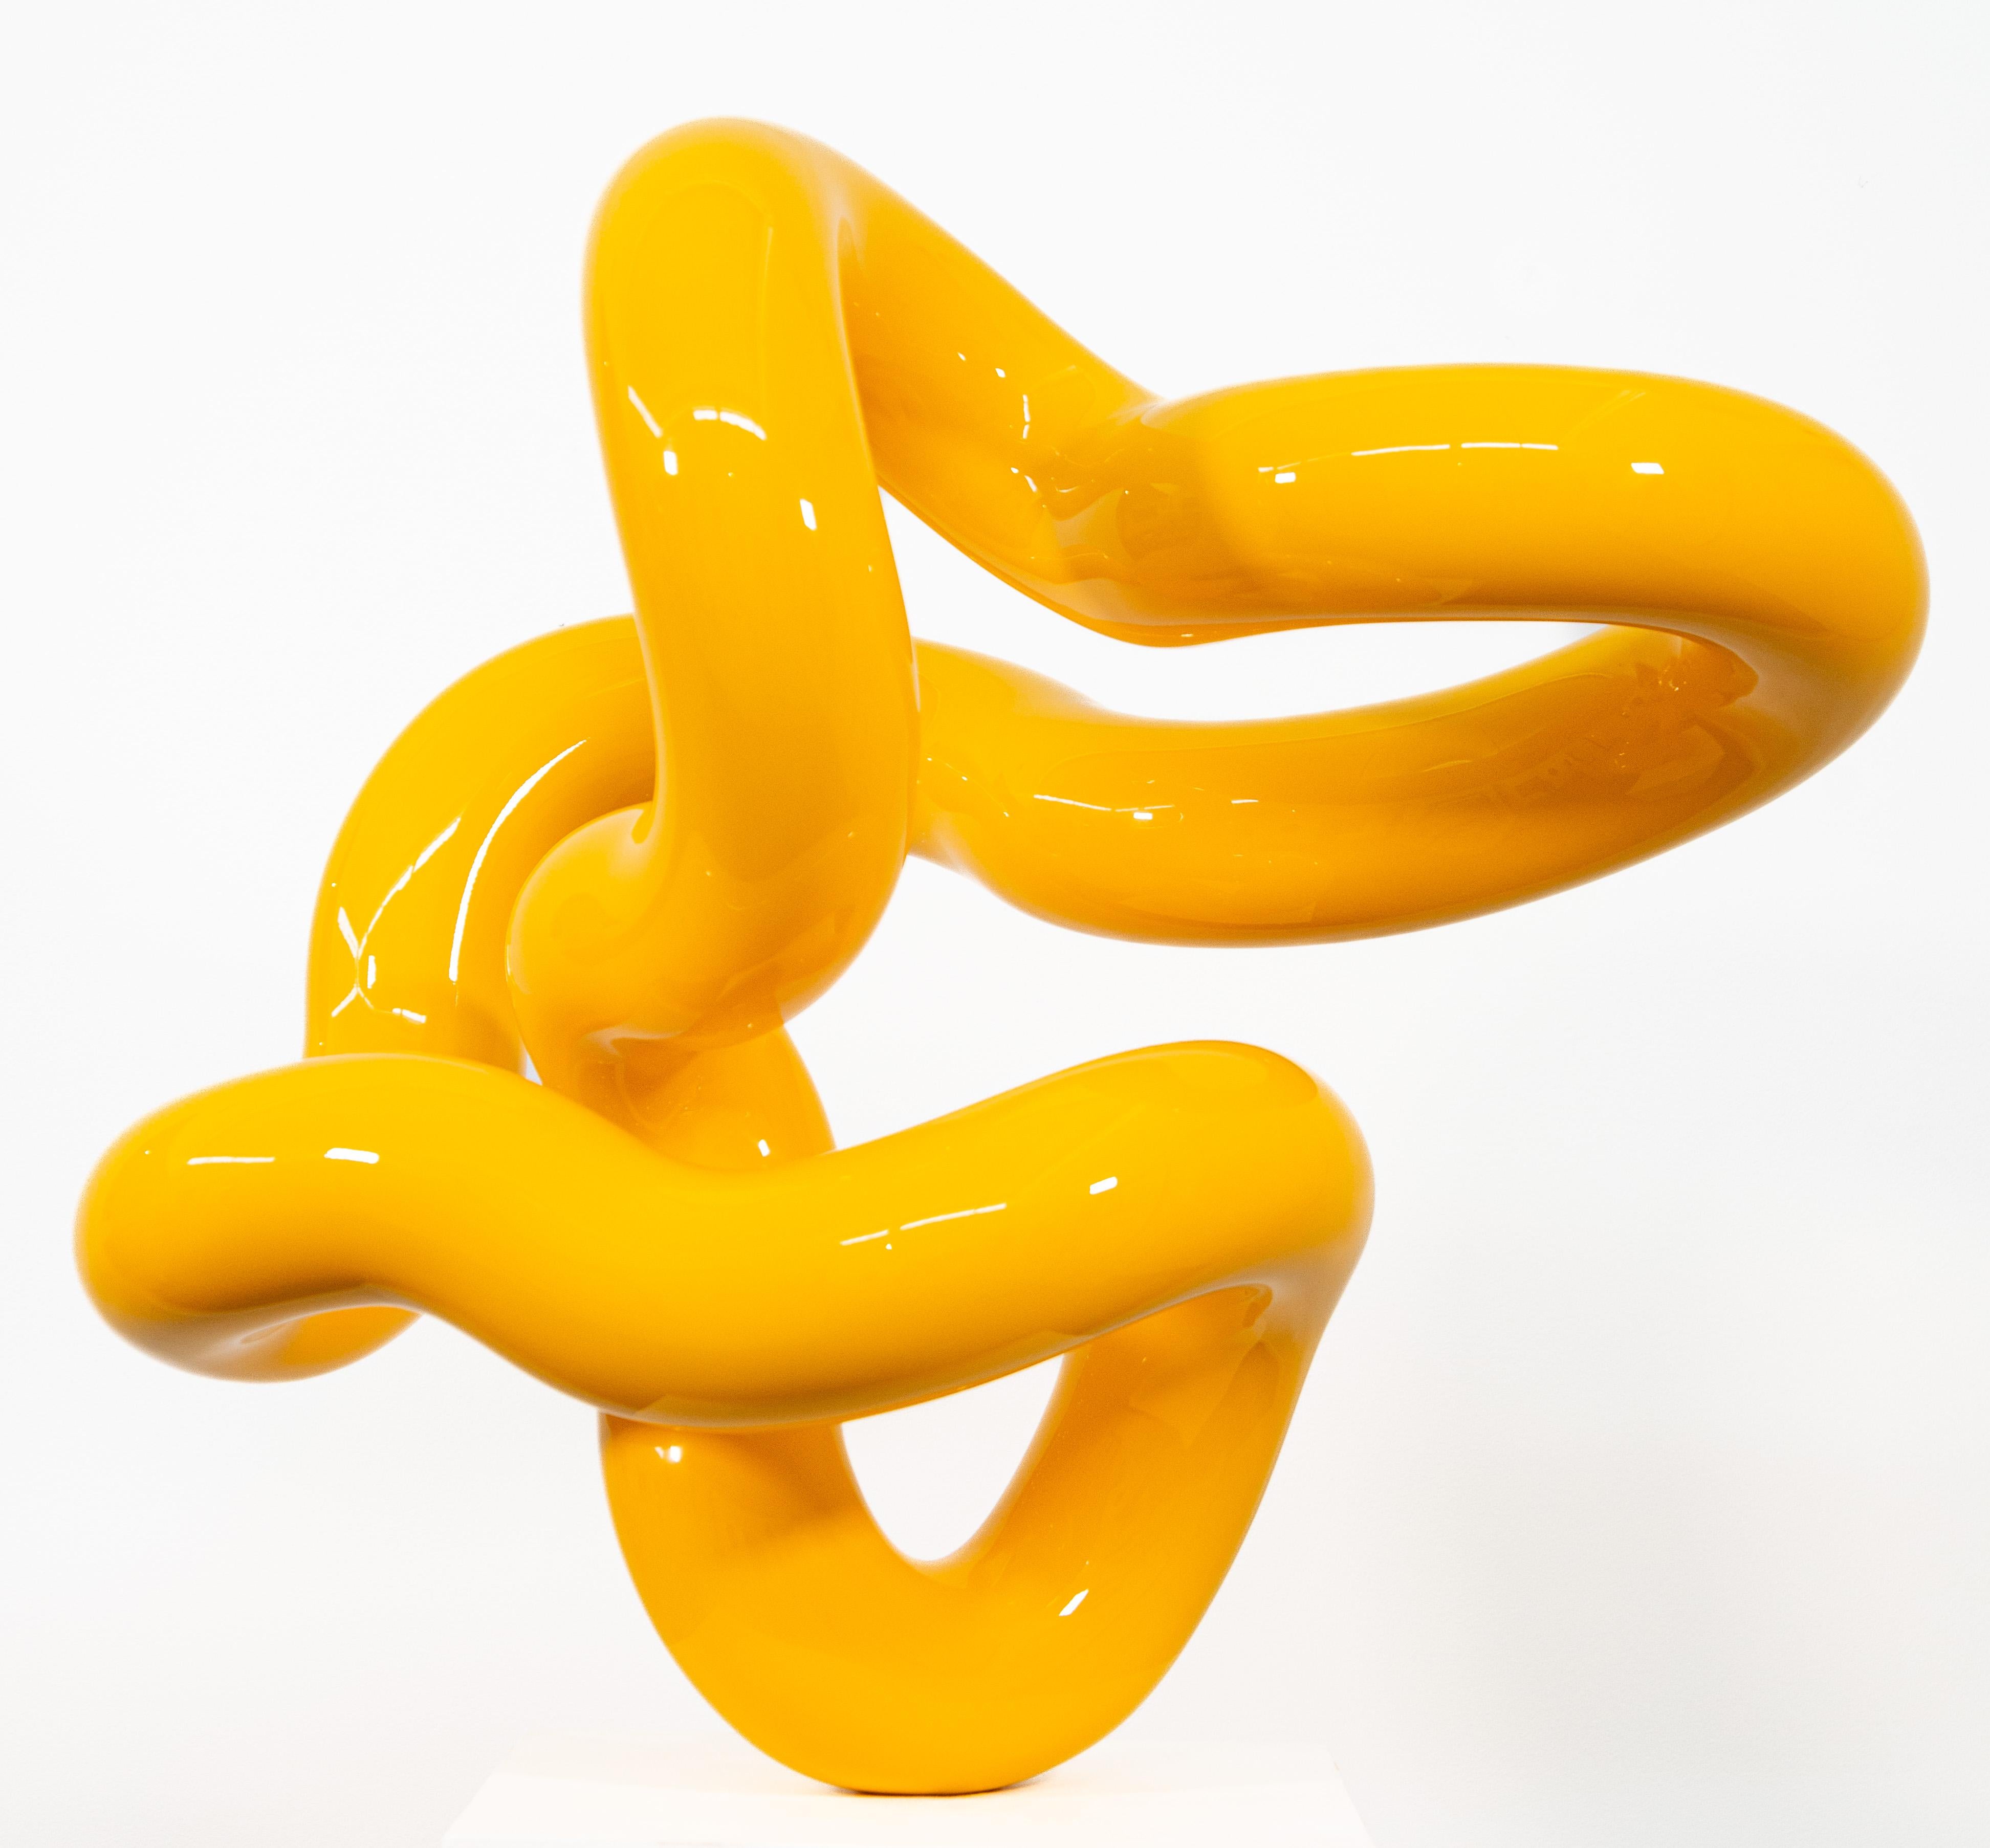 Abstract Sculpture Alexander Caldwell - Circuit jaune - sculpture en acier inoxydable poli, abstraite et peinte